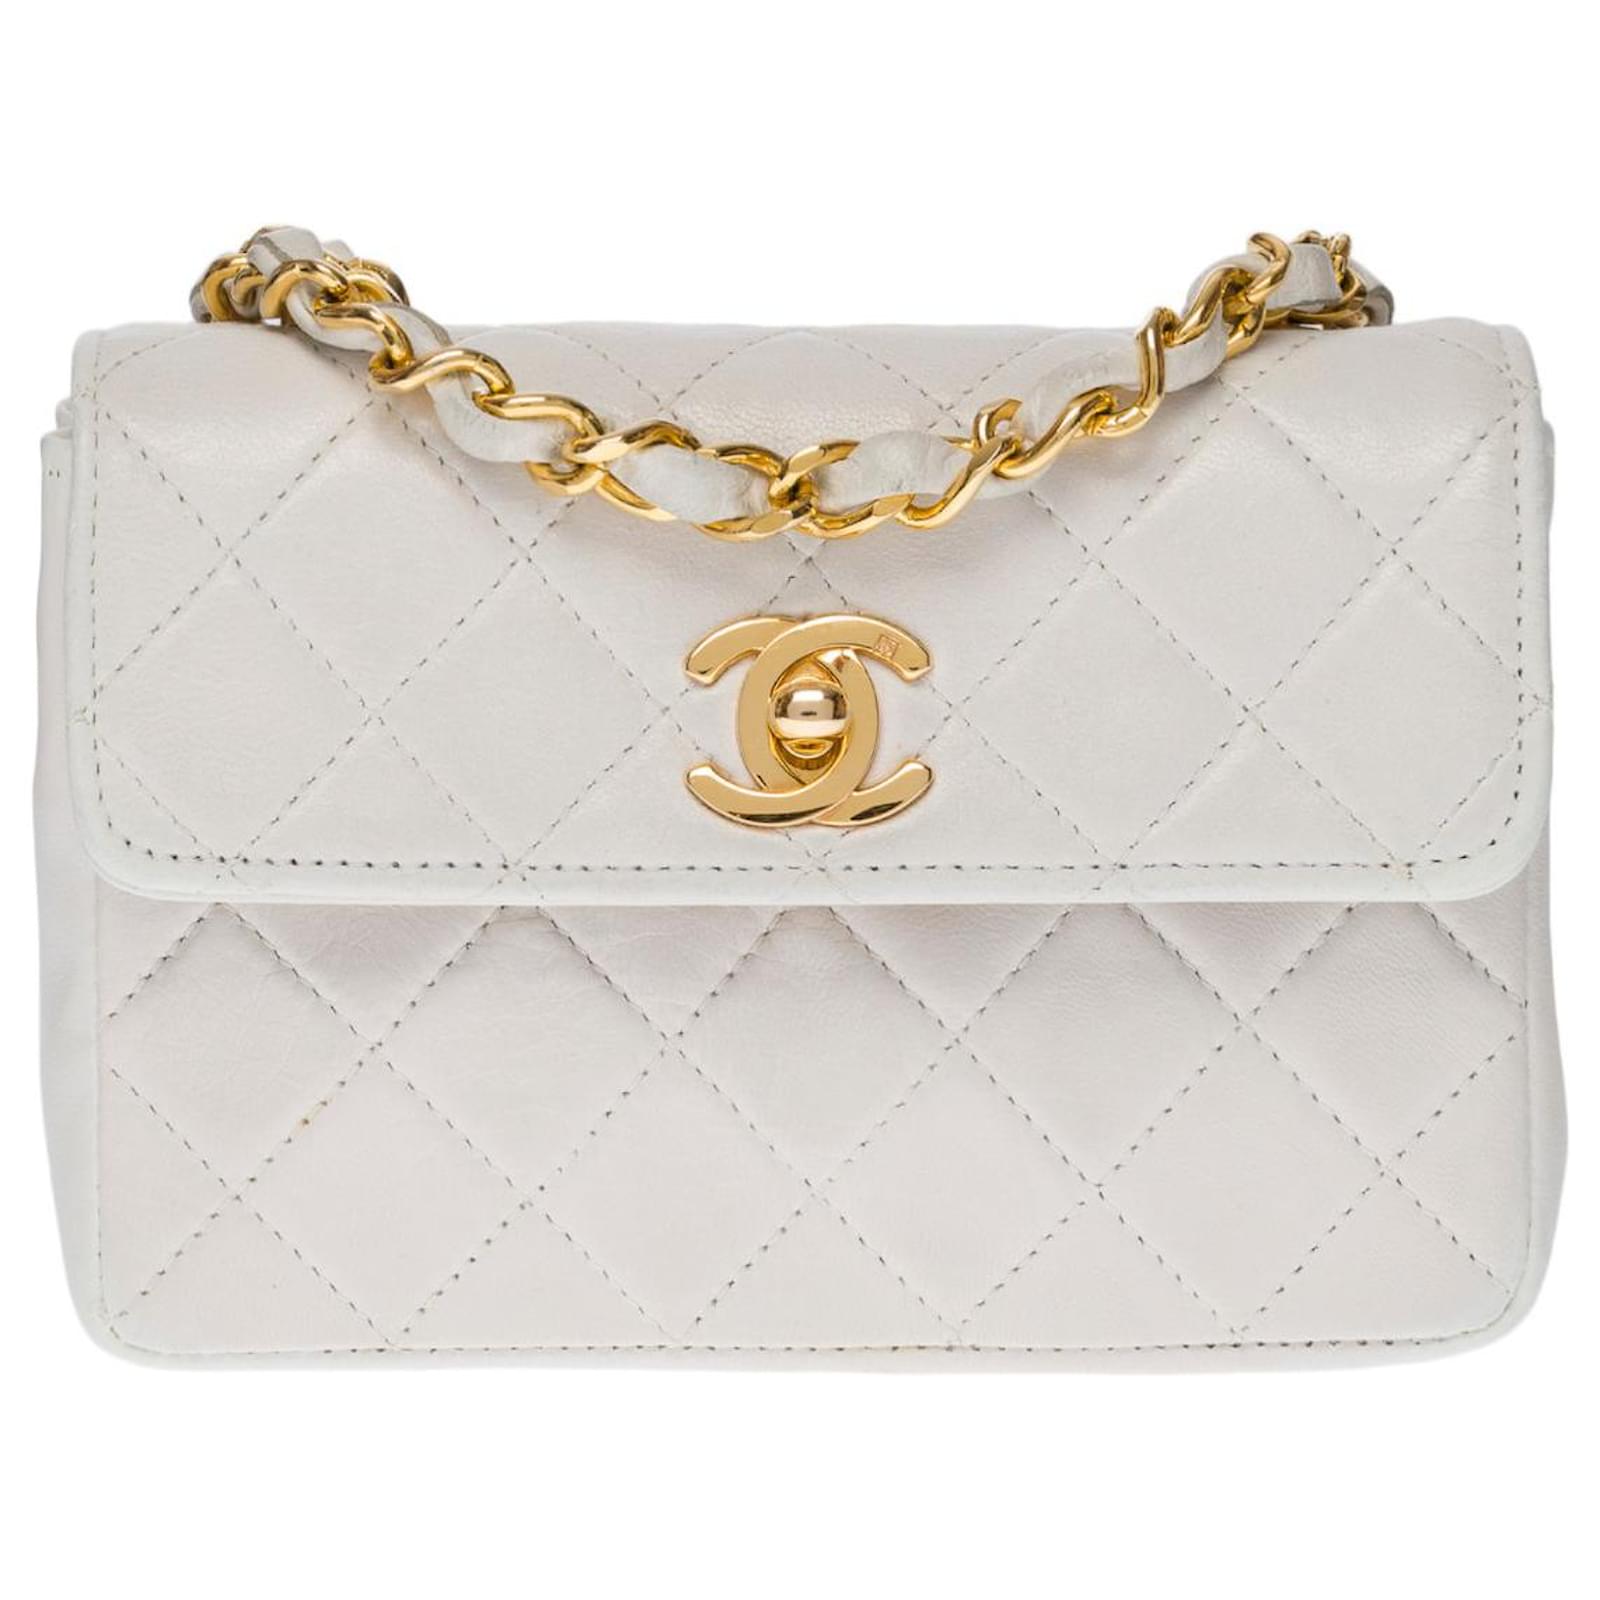 Timeless Superb Chanel Mini Classic Flap bag shoulder bag in white